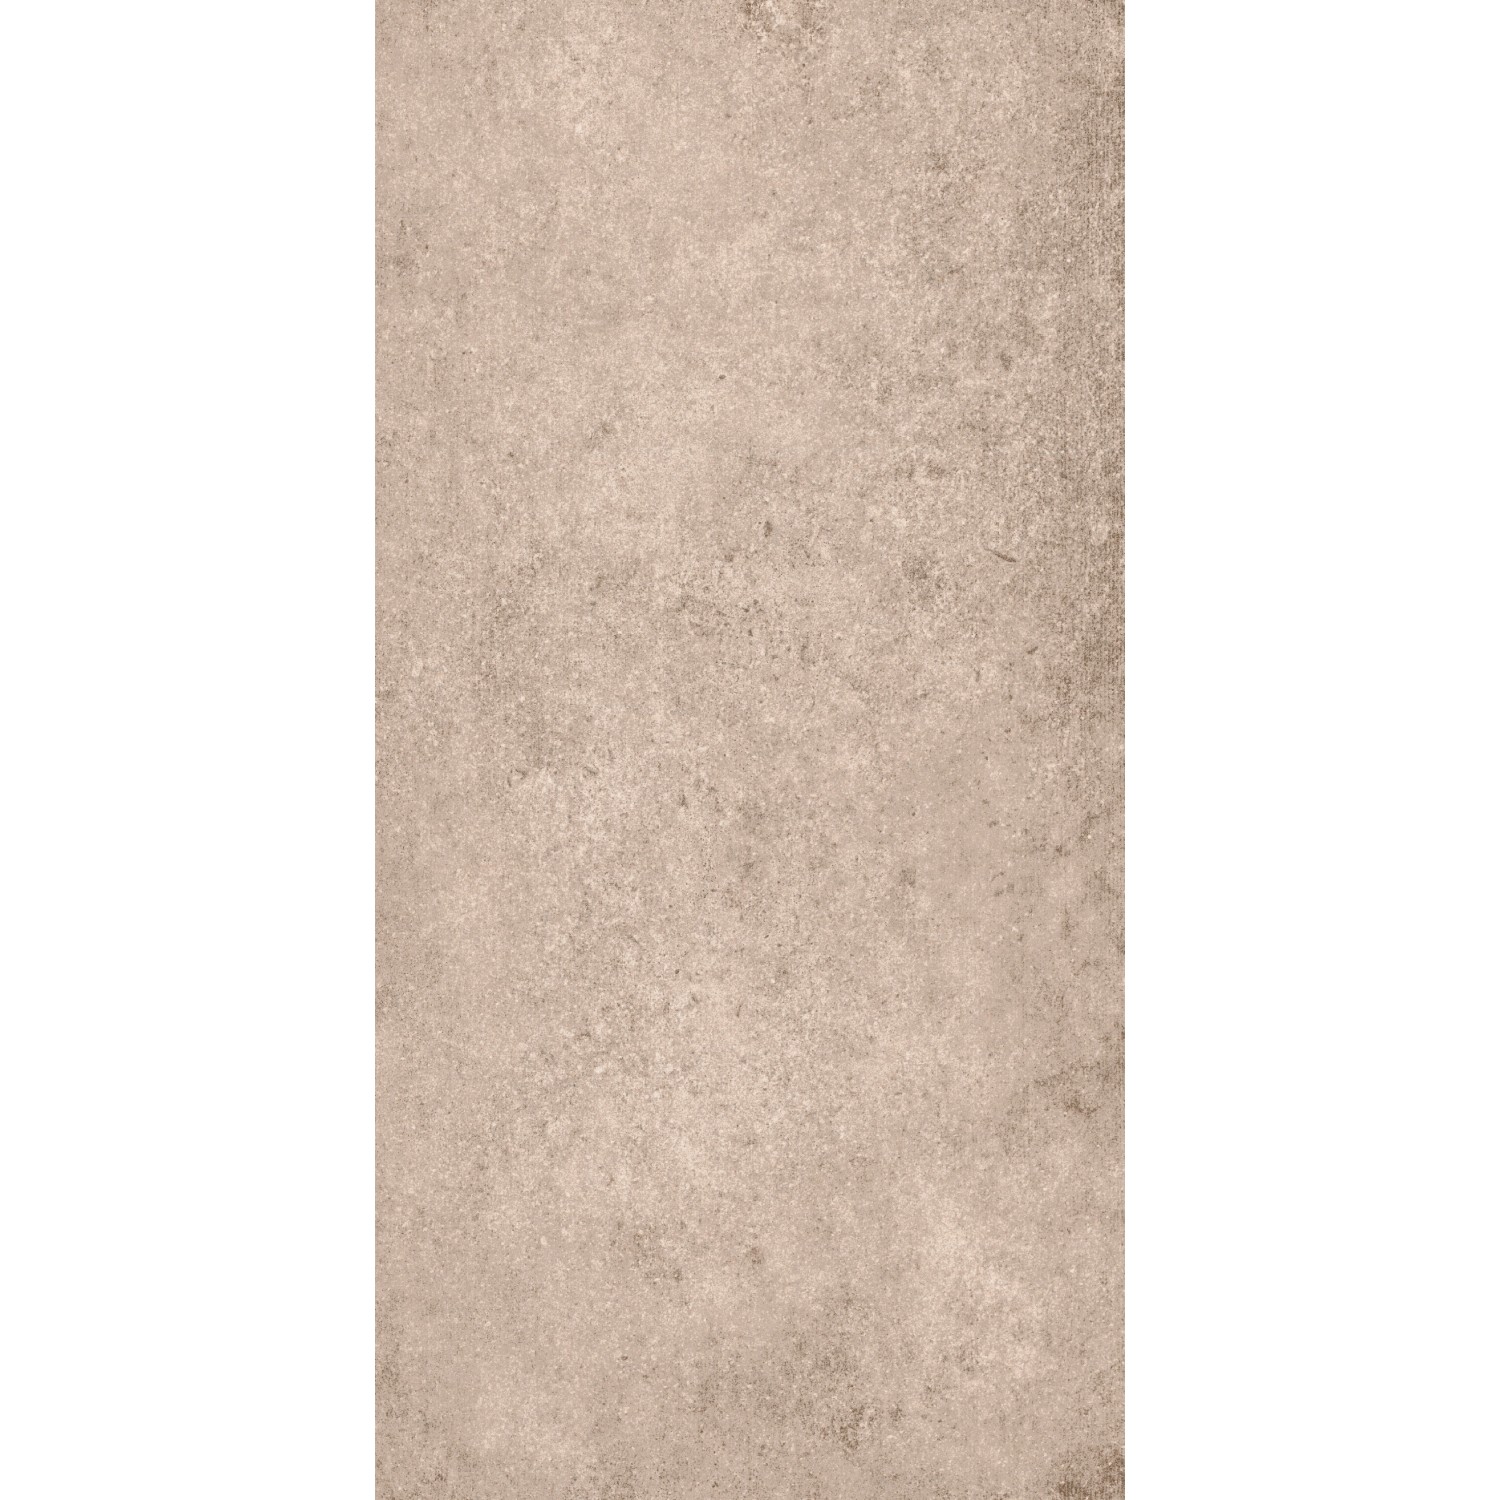 Feinsteinzeug Atlas Grau Glasiert Matt 30 cm x 60 cm x 0,8 cm